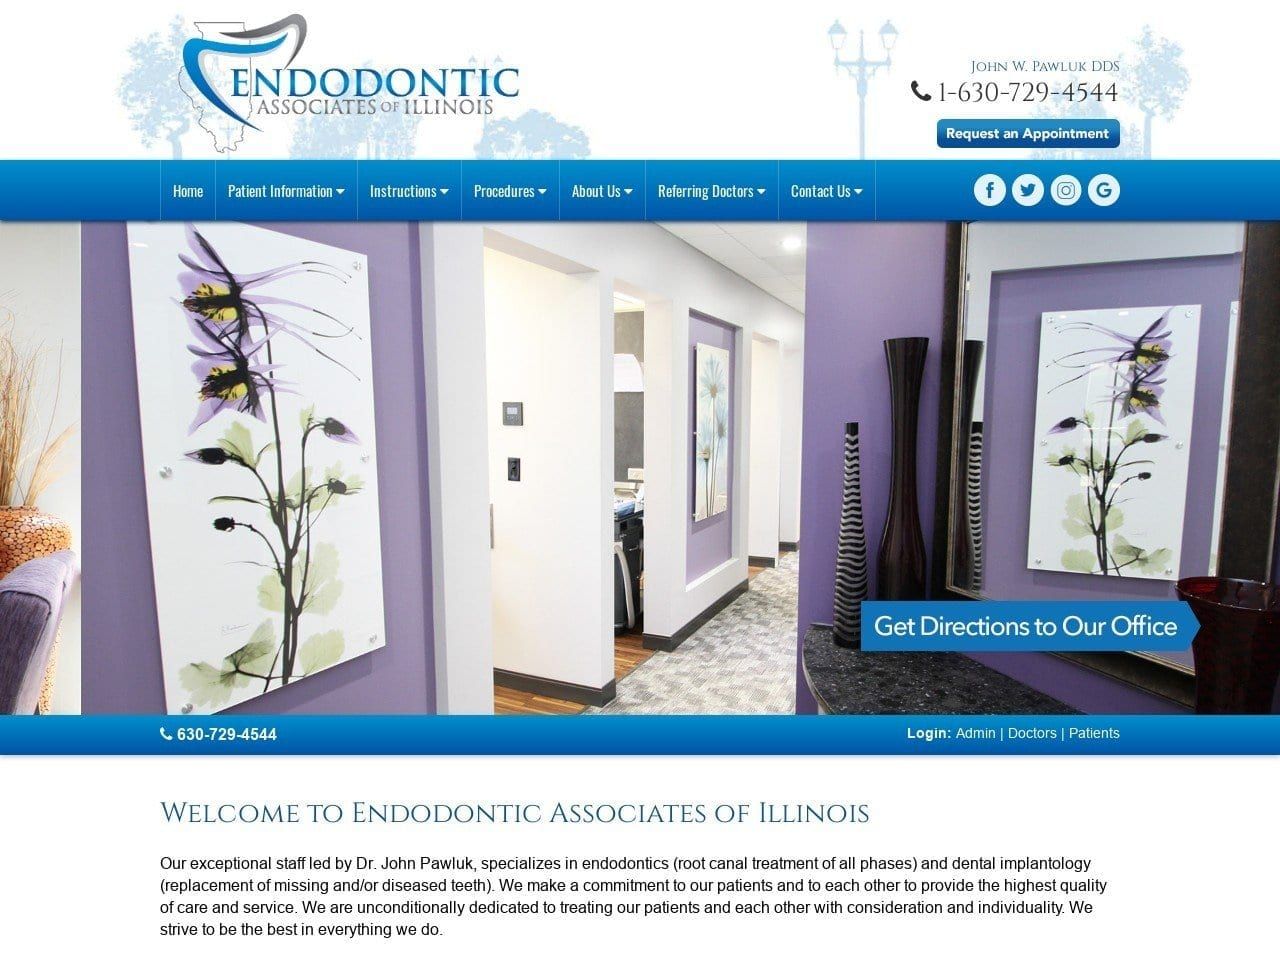 Endodontic Associates of Illinois Website Screenshot from endo-illinois.com